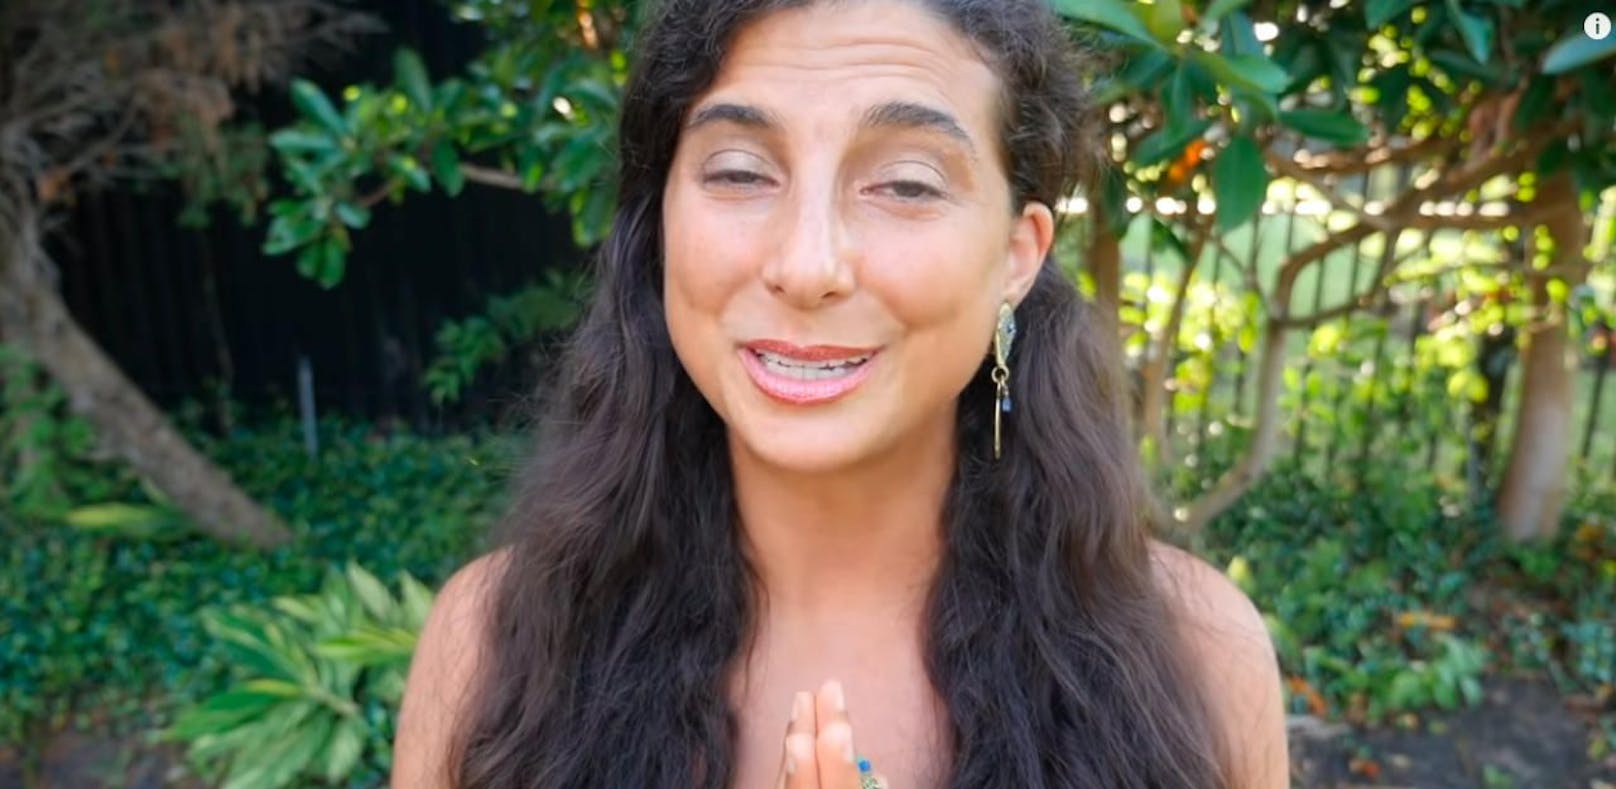 YouTuberin verlangt 5.500 Dollar für Yoga-Urlaub